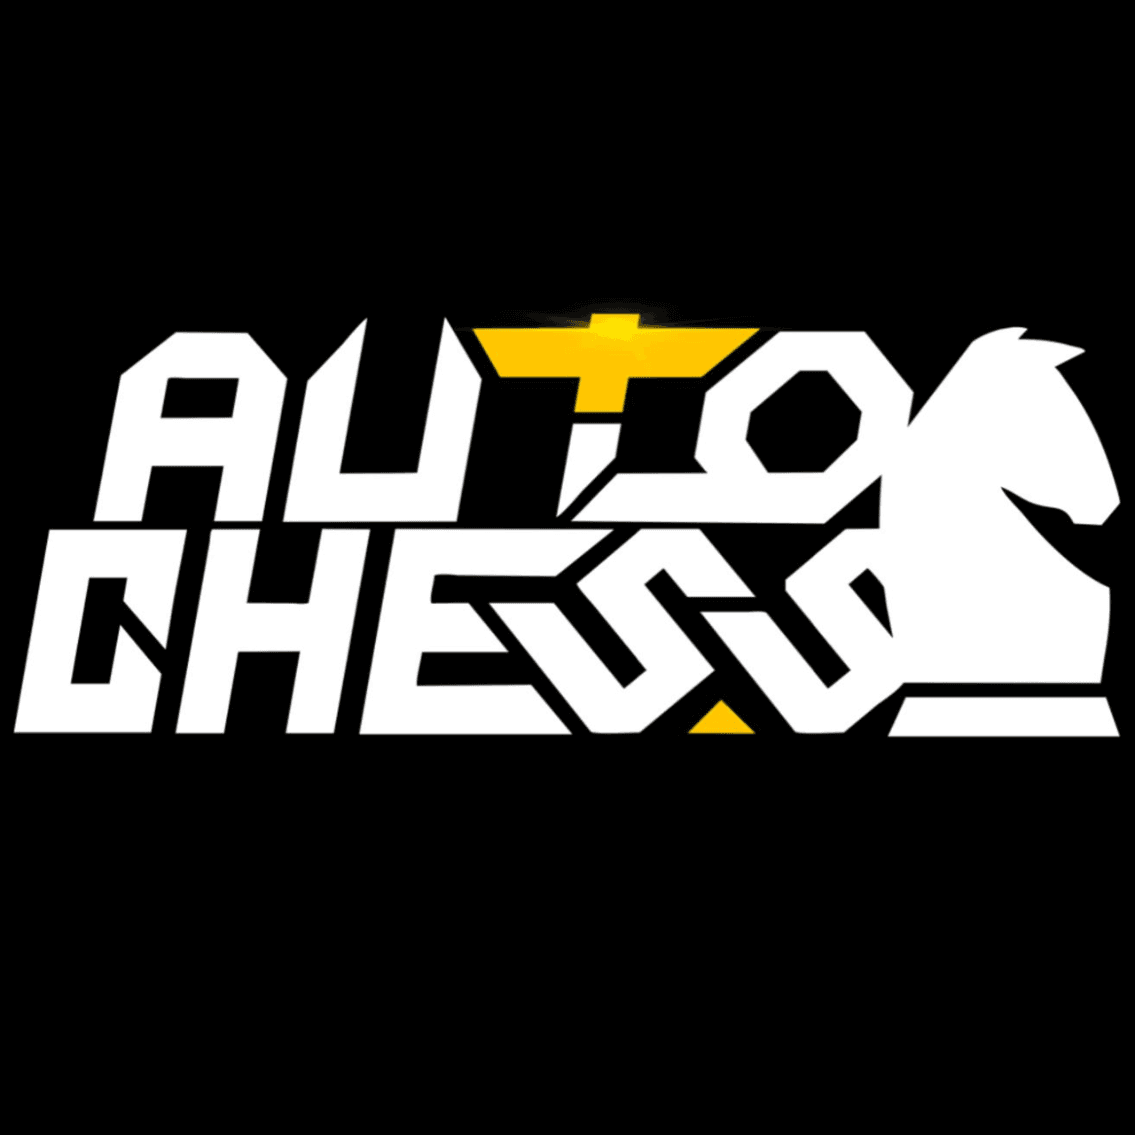 Auto Chess